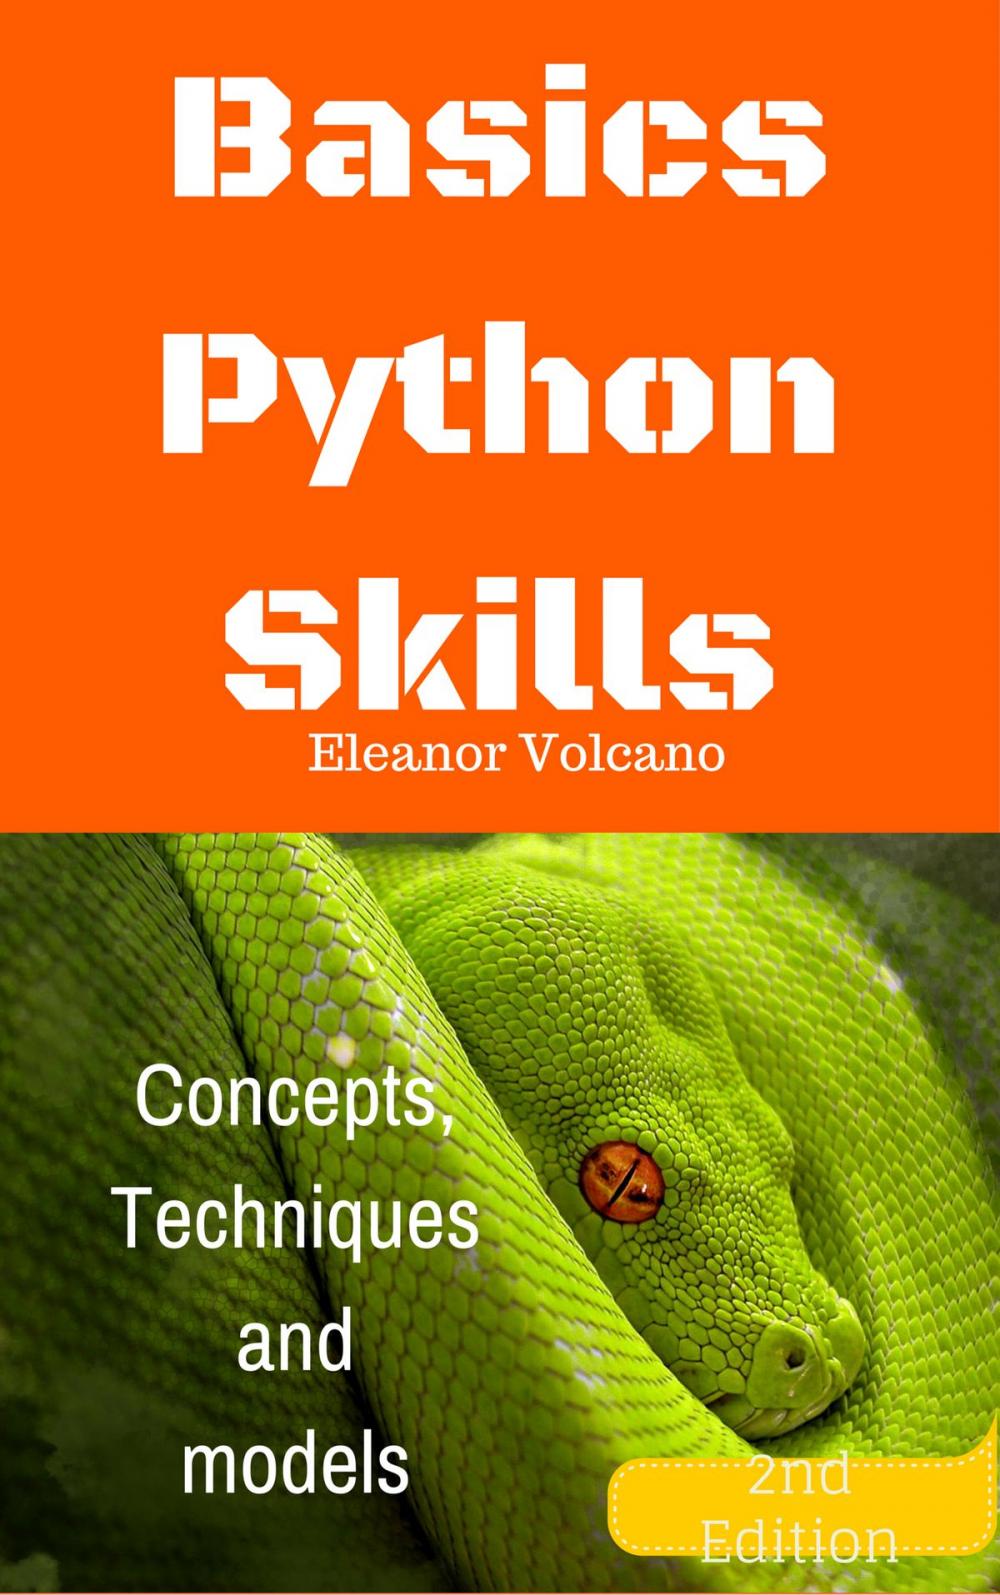 Big bigCover of Basics Python Skills